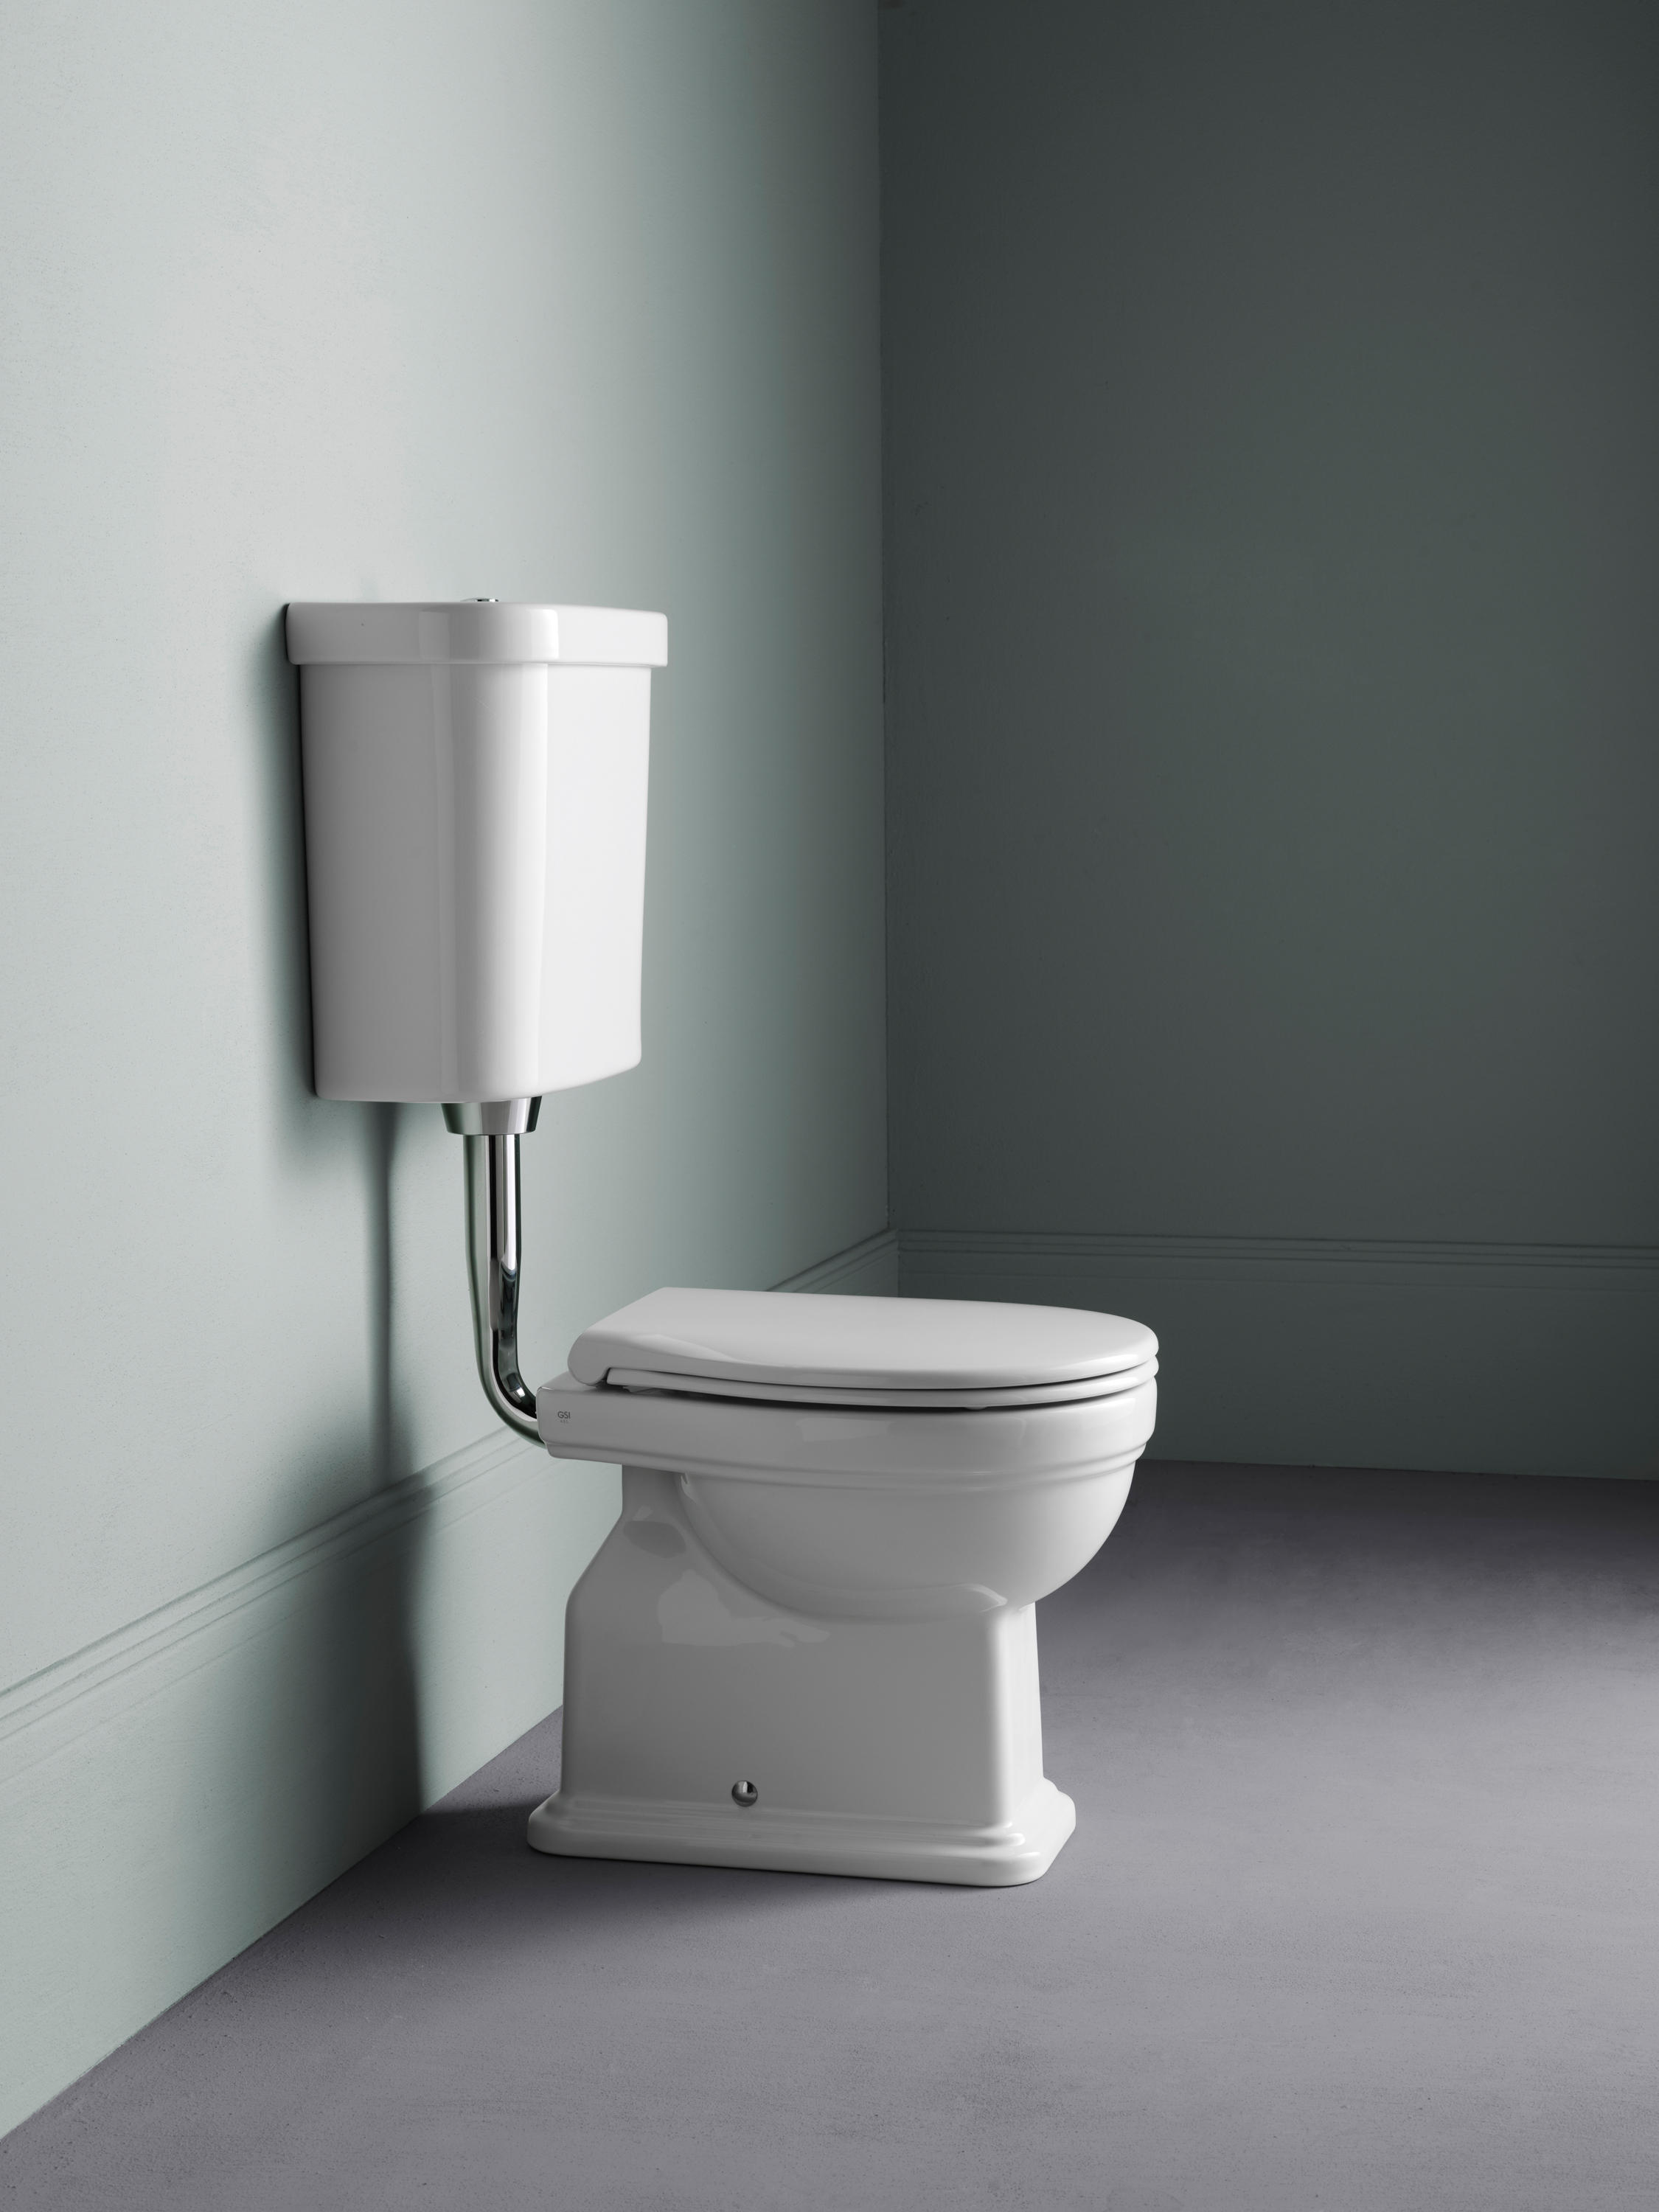 Classic WC & designer furniture | Architonic